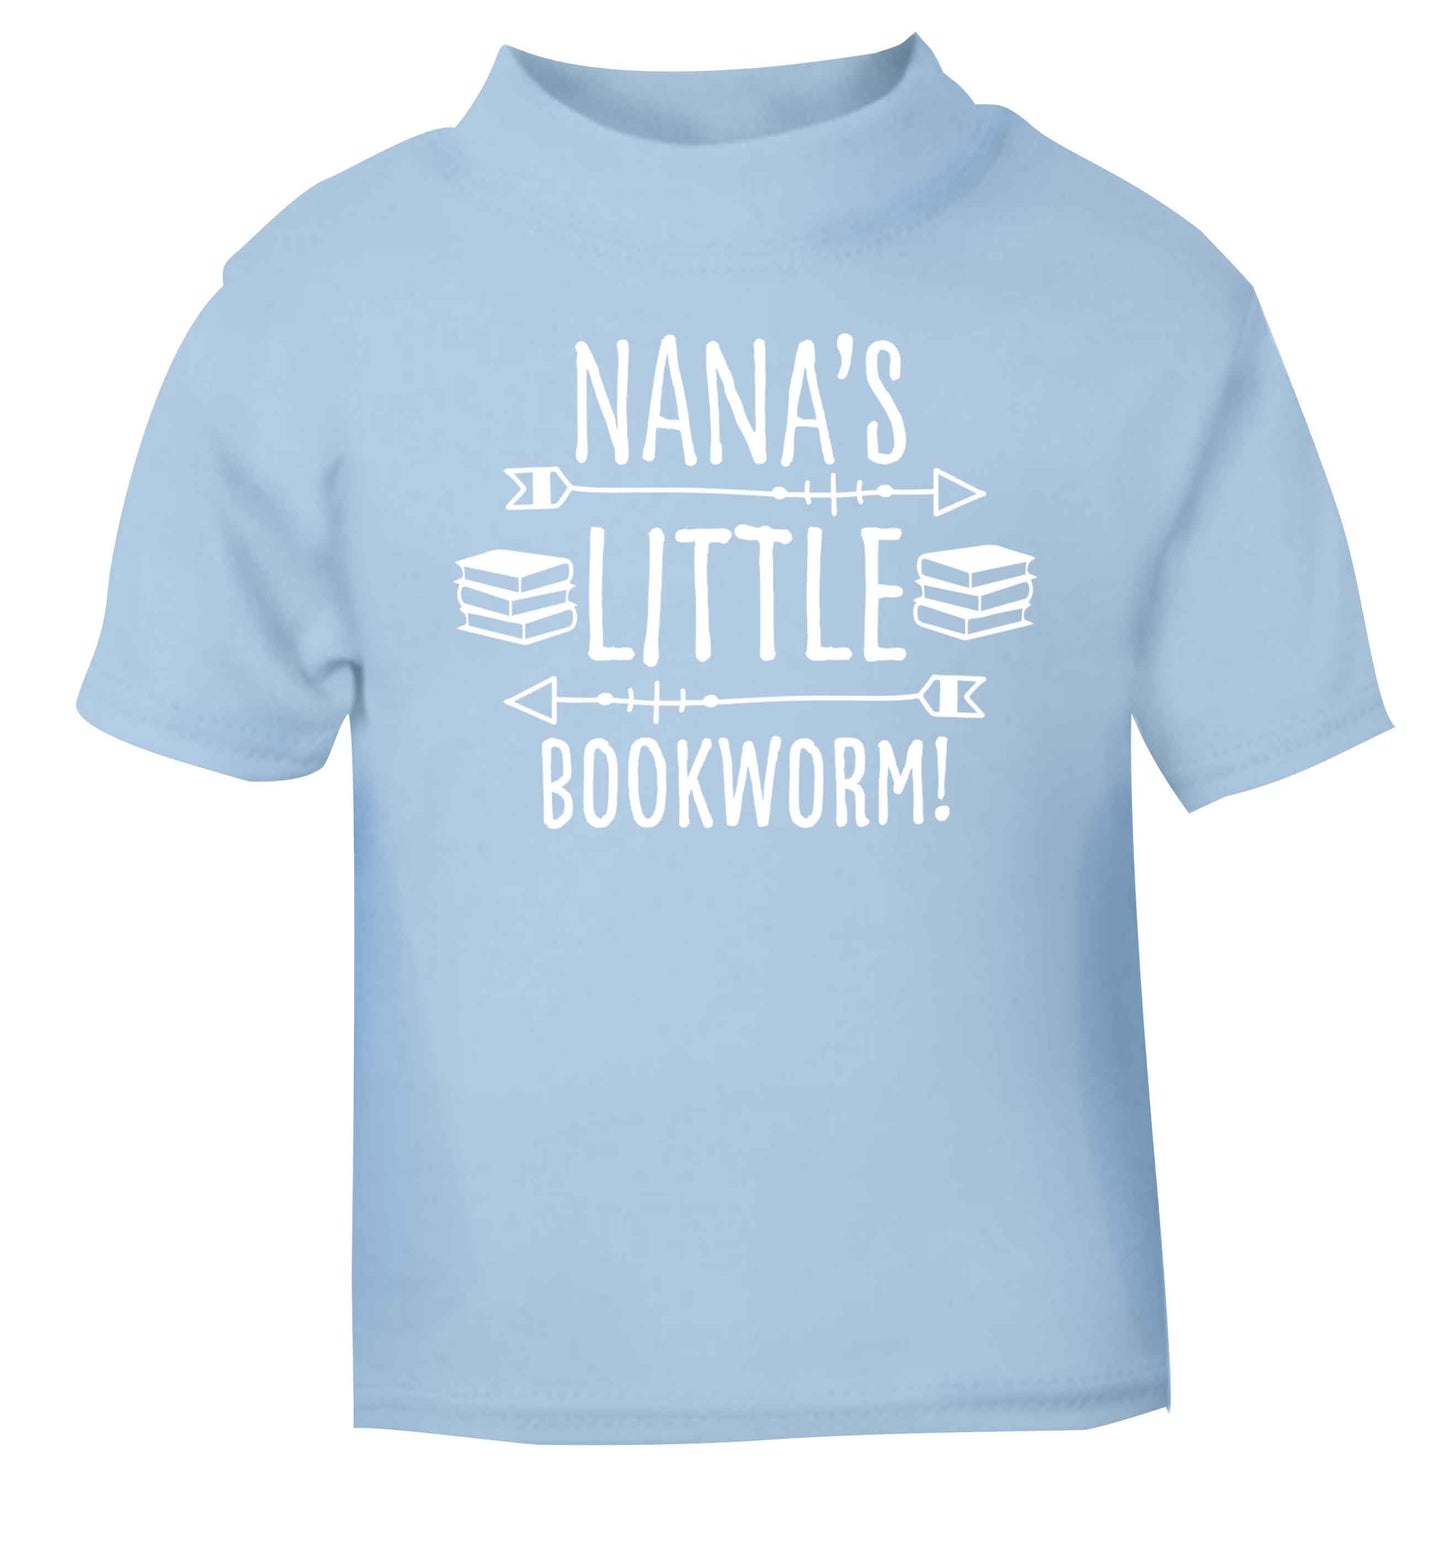 Nana's little bookworm light blue baby toddler Tshirt 2 Years